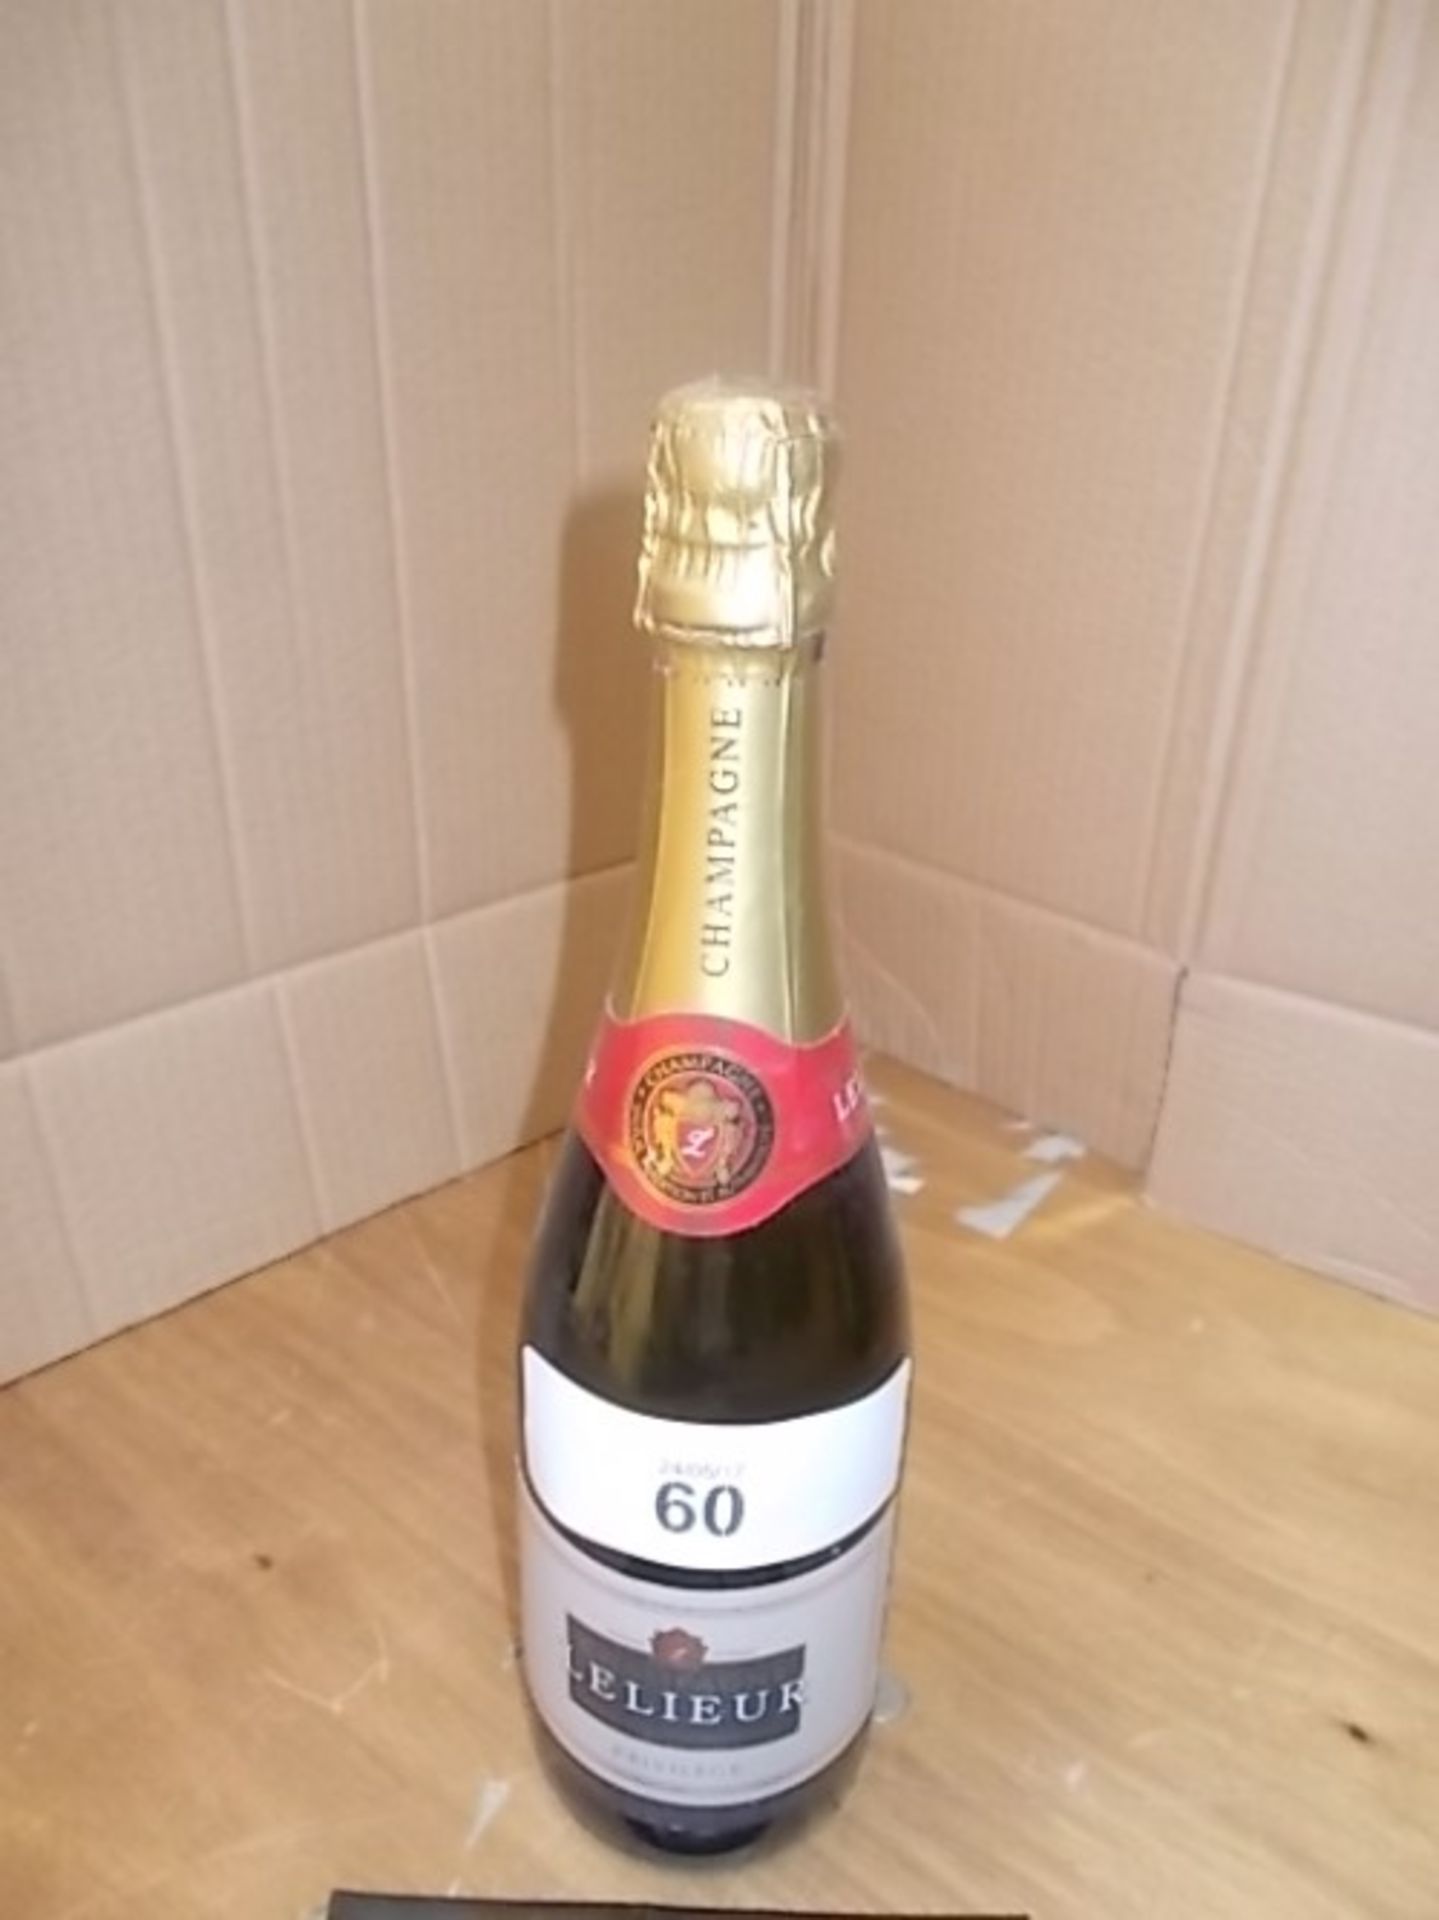 9 x 750ml bottles of Champagne Lelieur Privilege